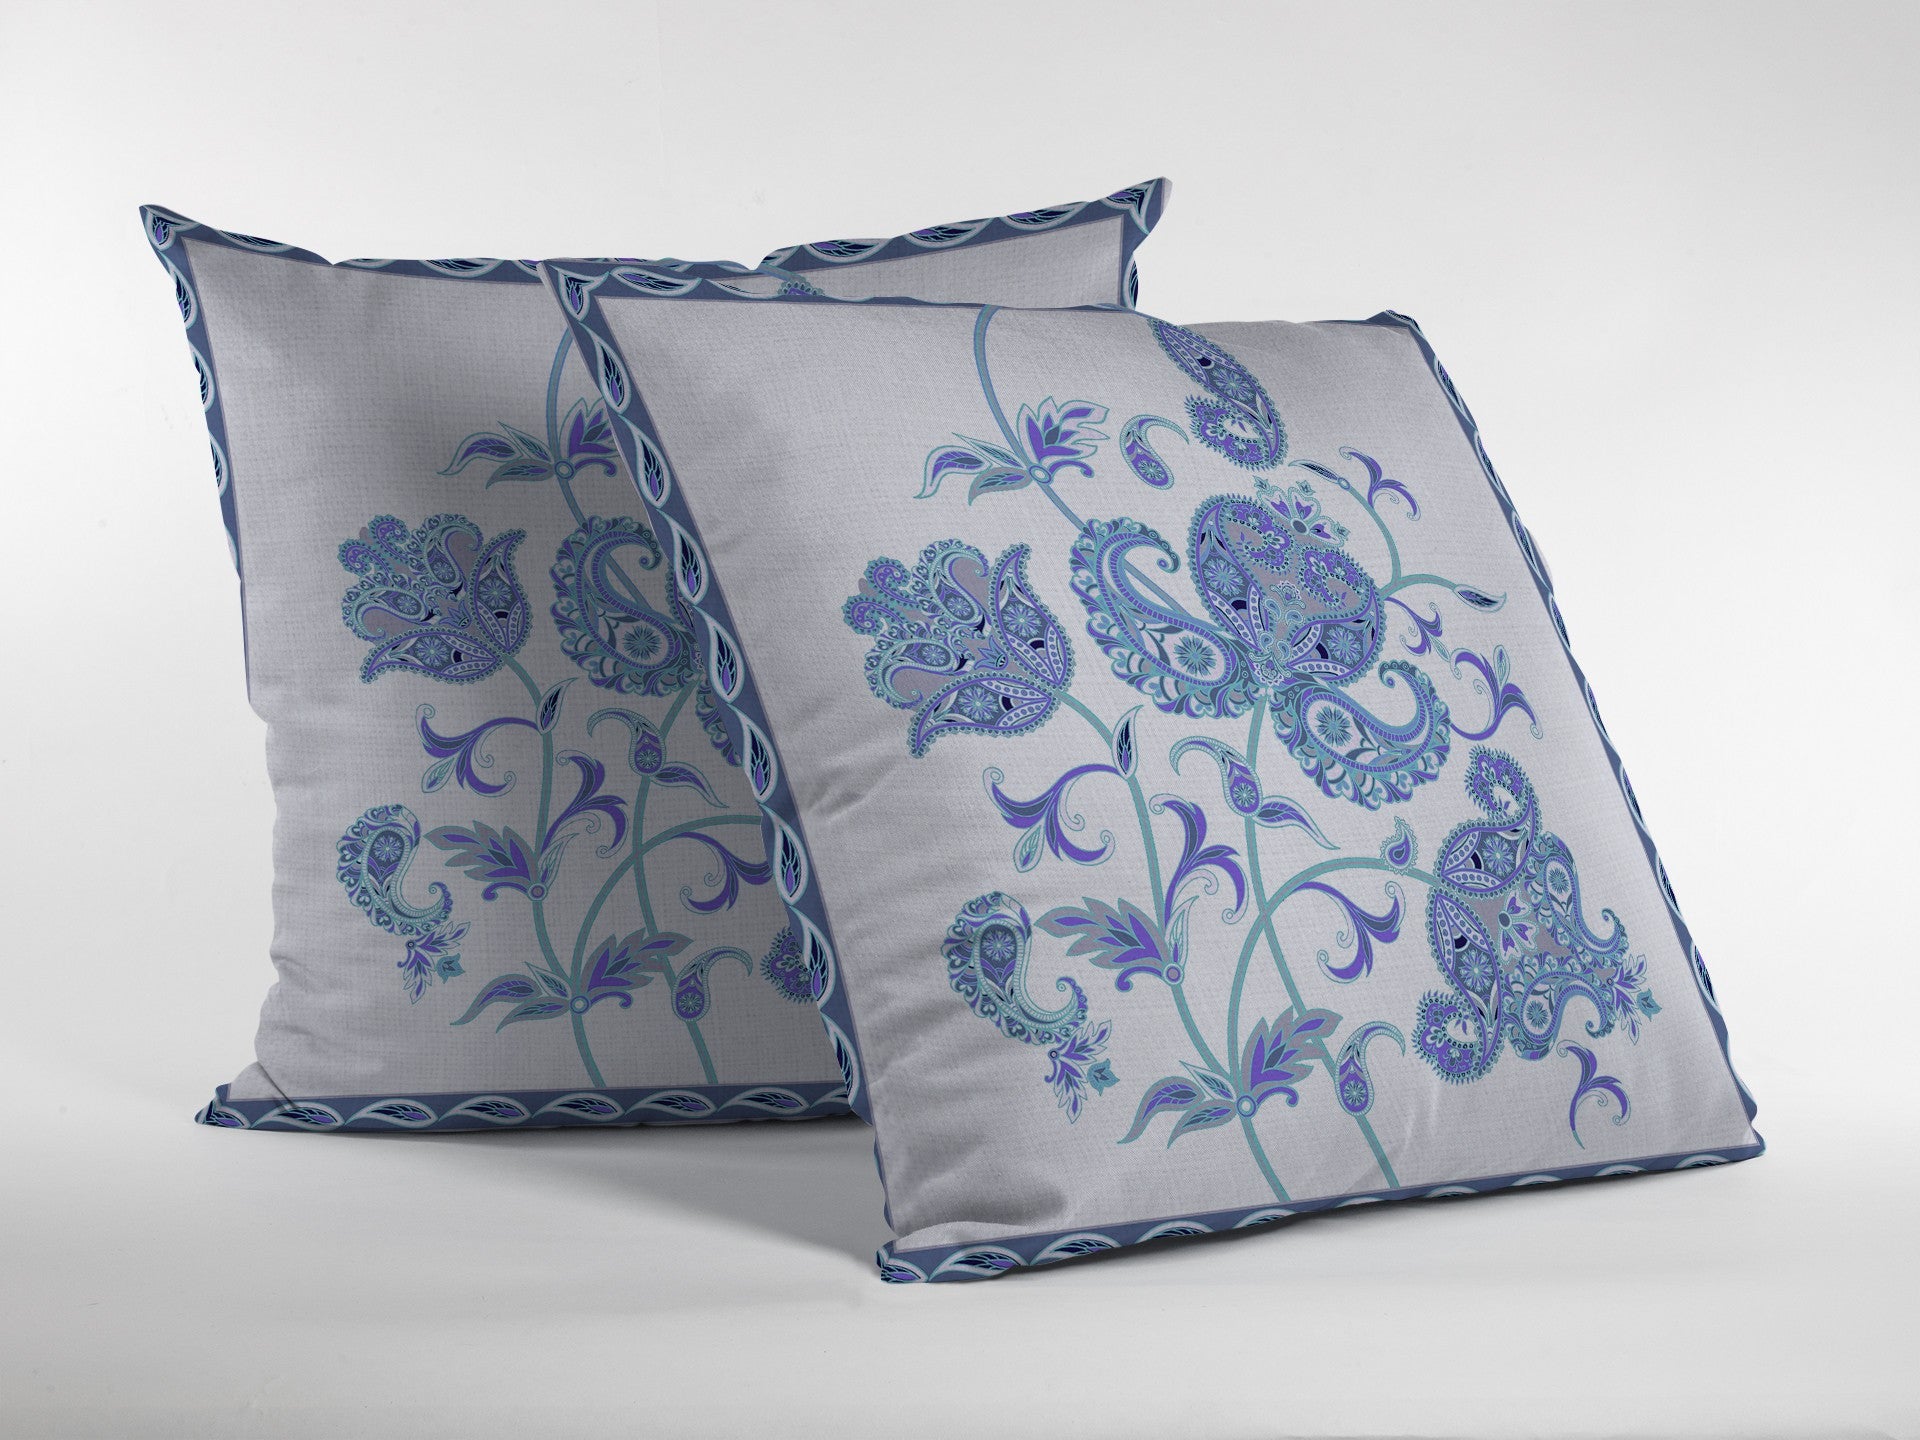 16” Blue White Wildflower Indoor Outdoor Zippered Throw Pillow